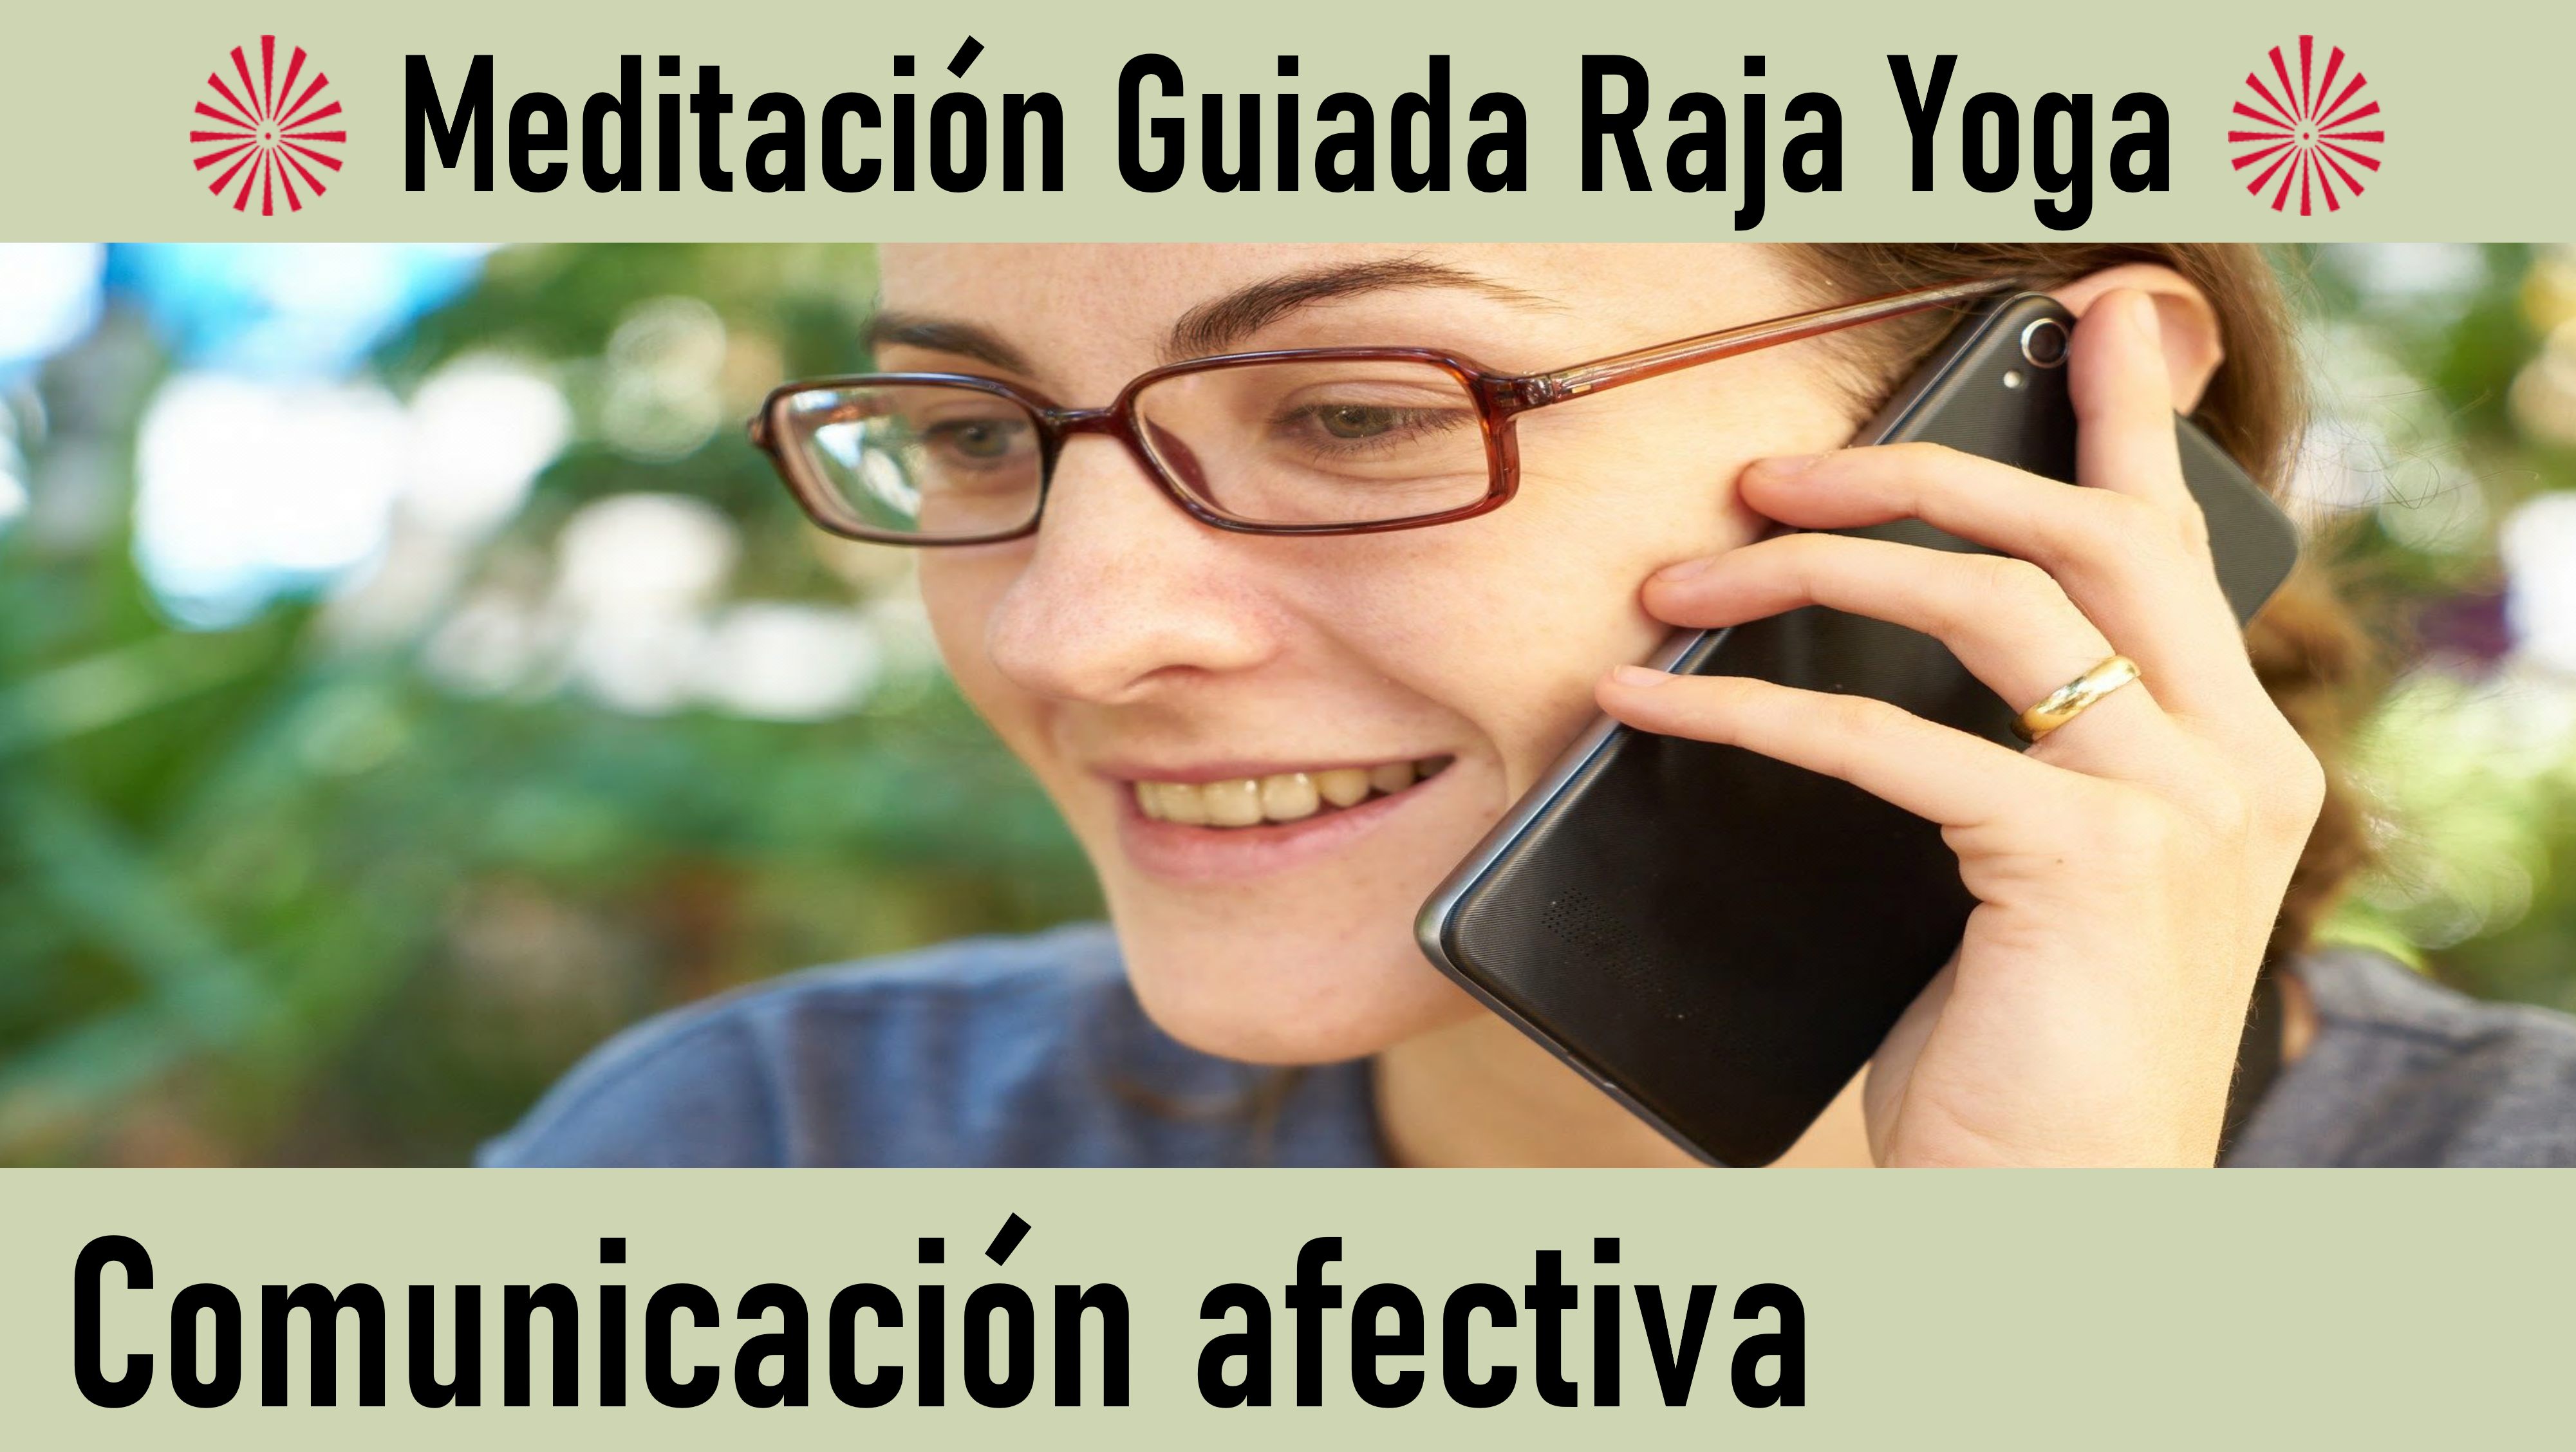 Meditación Raja Yoga: Comunicación afectiva (24 Mayo 2020) On-line desde Valencia